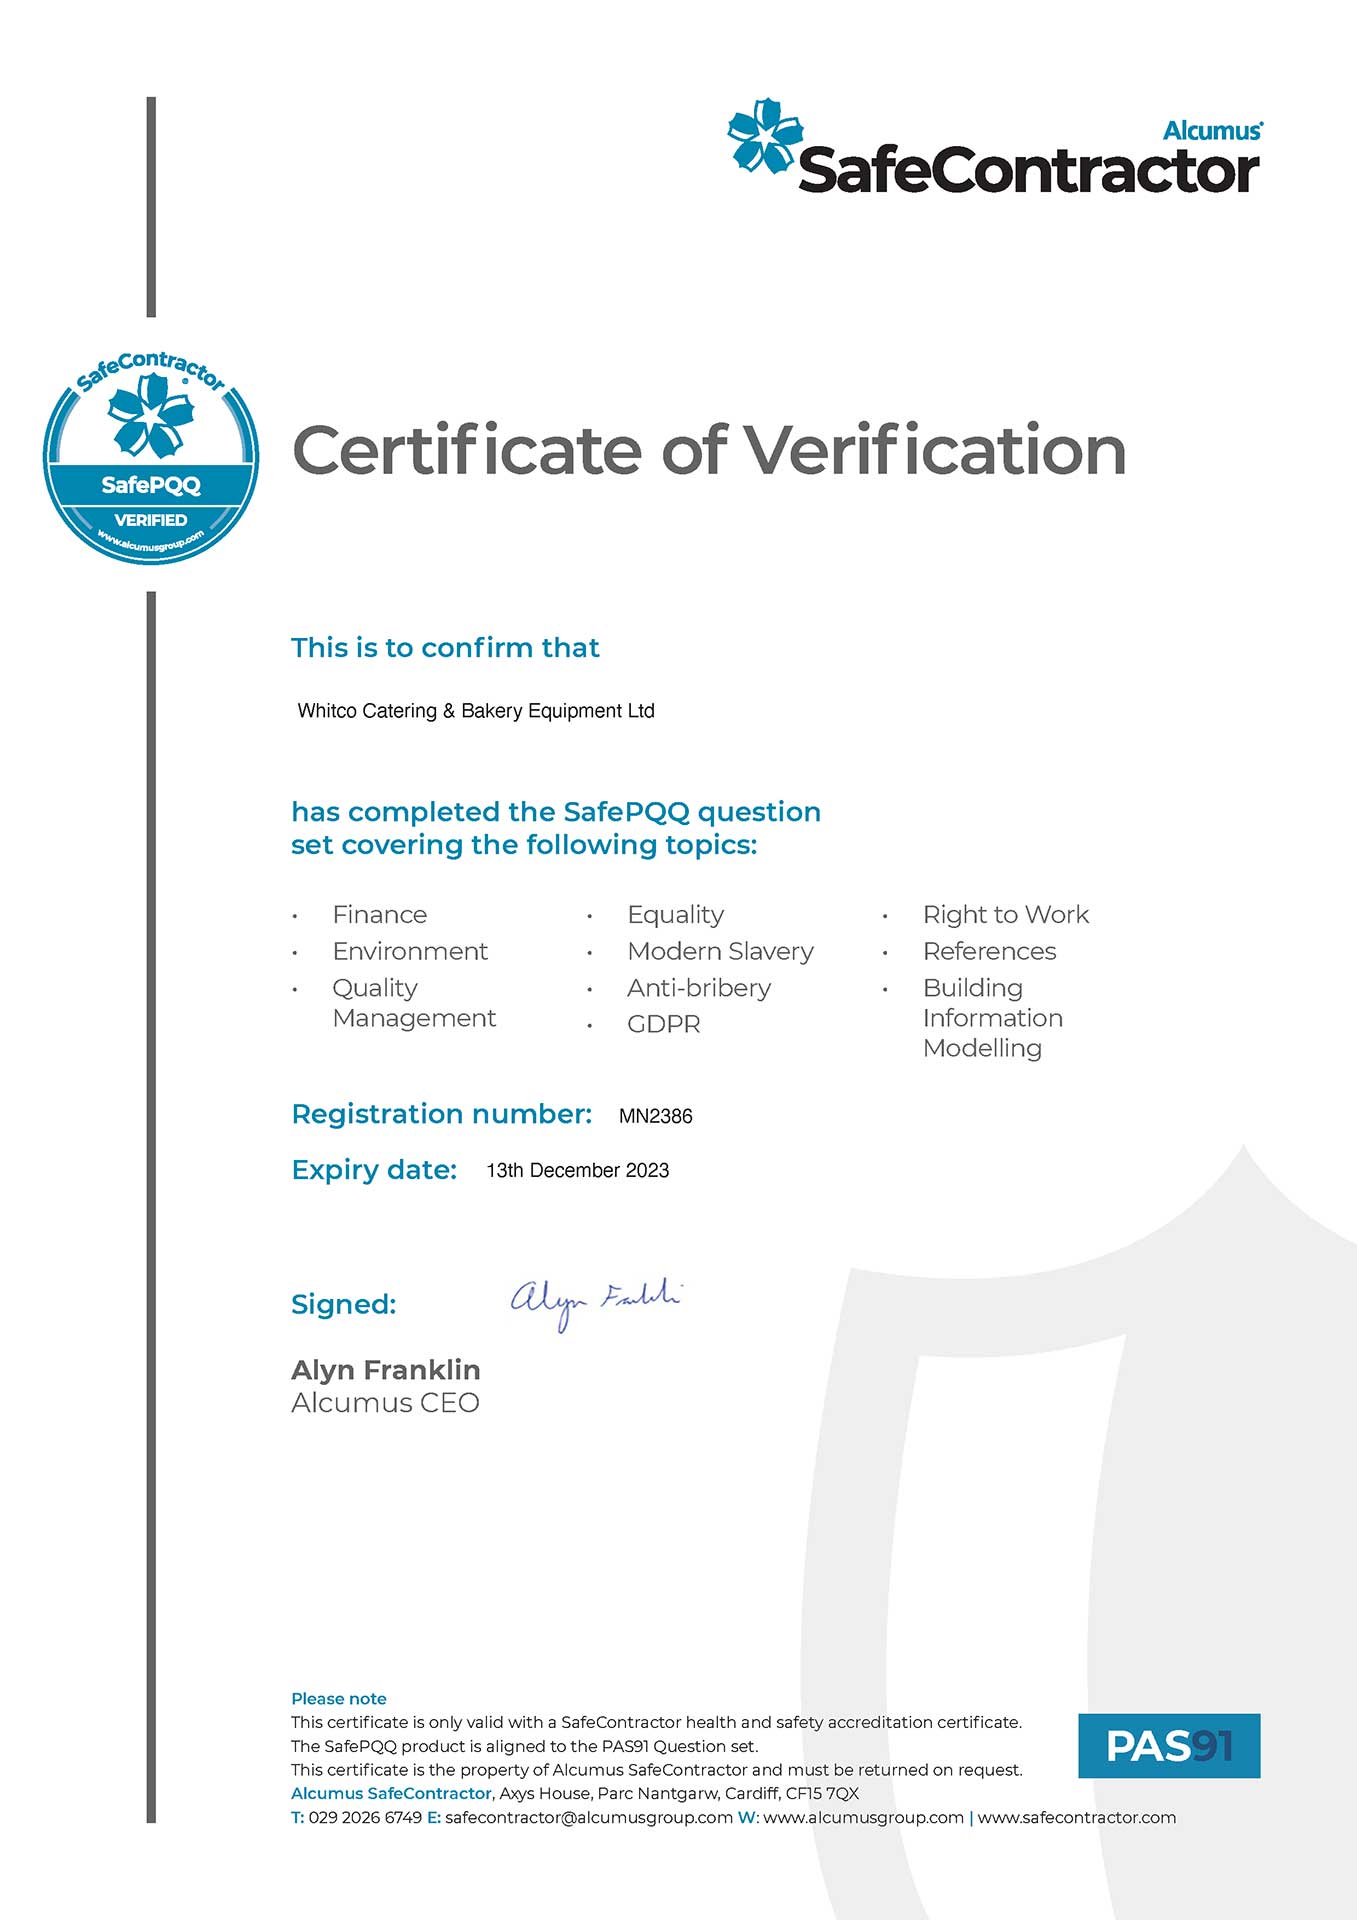 SafePPQ (PAS91) Certificate of Verification